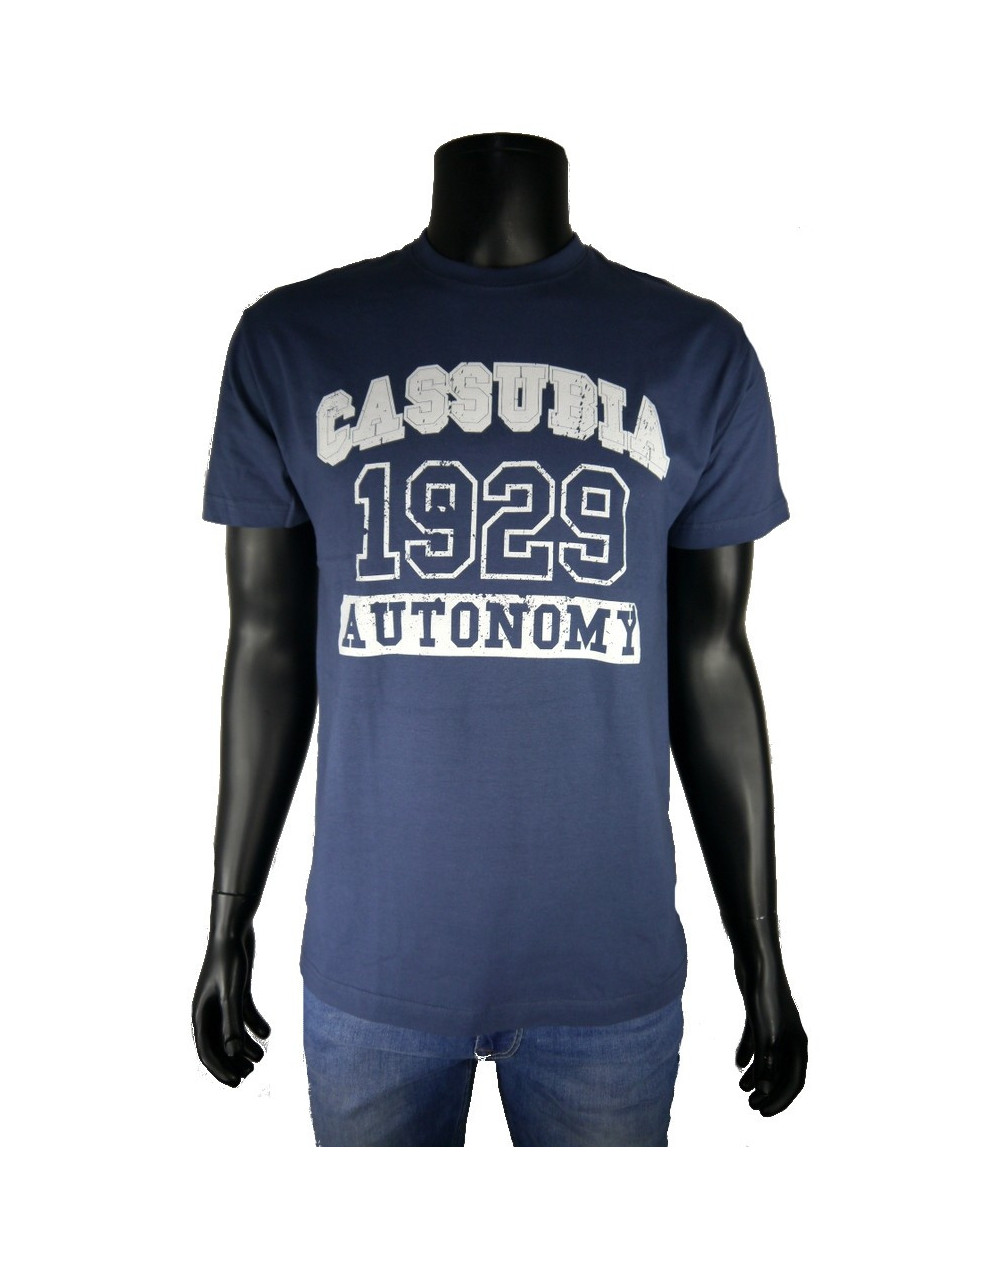 ~T-shirt męski CASSUBIA...